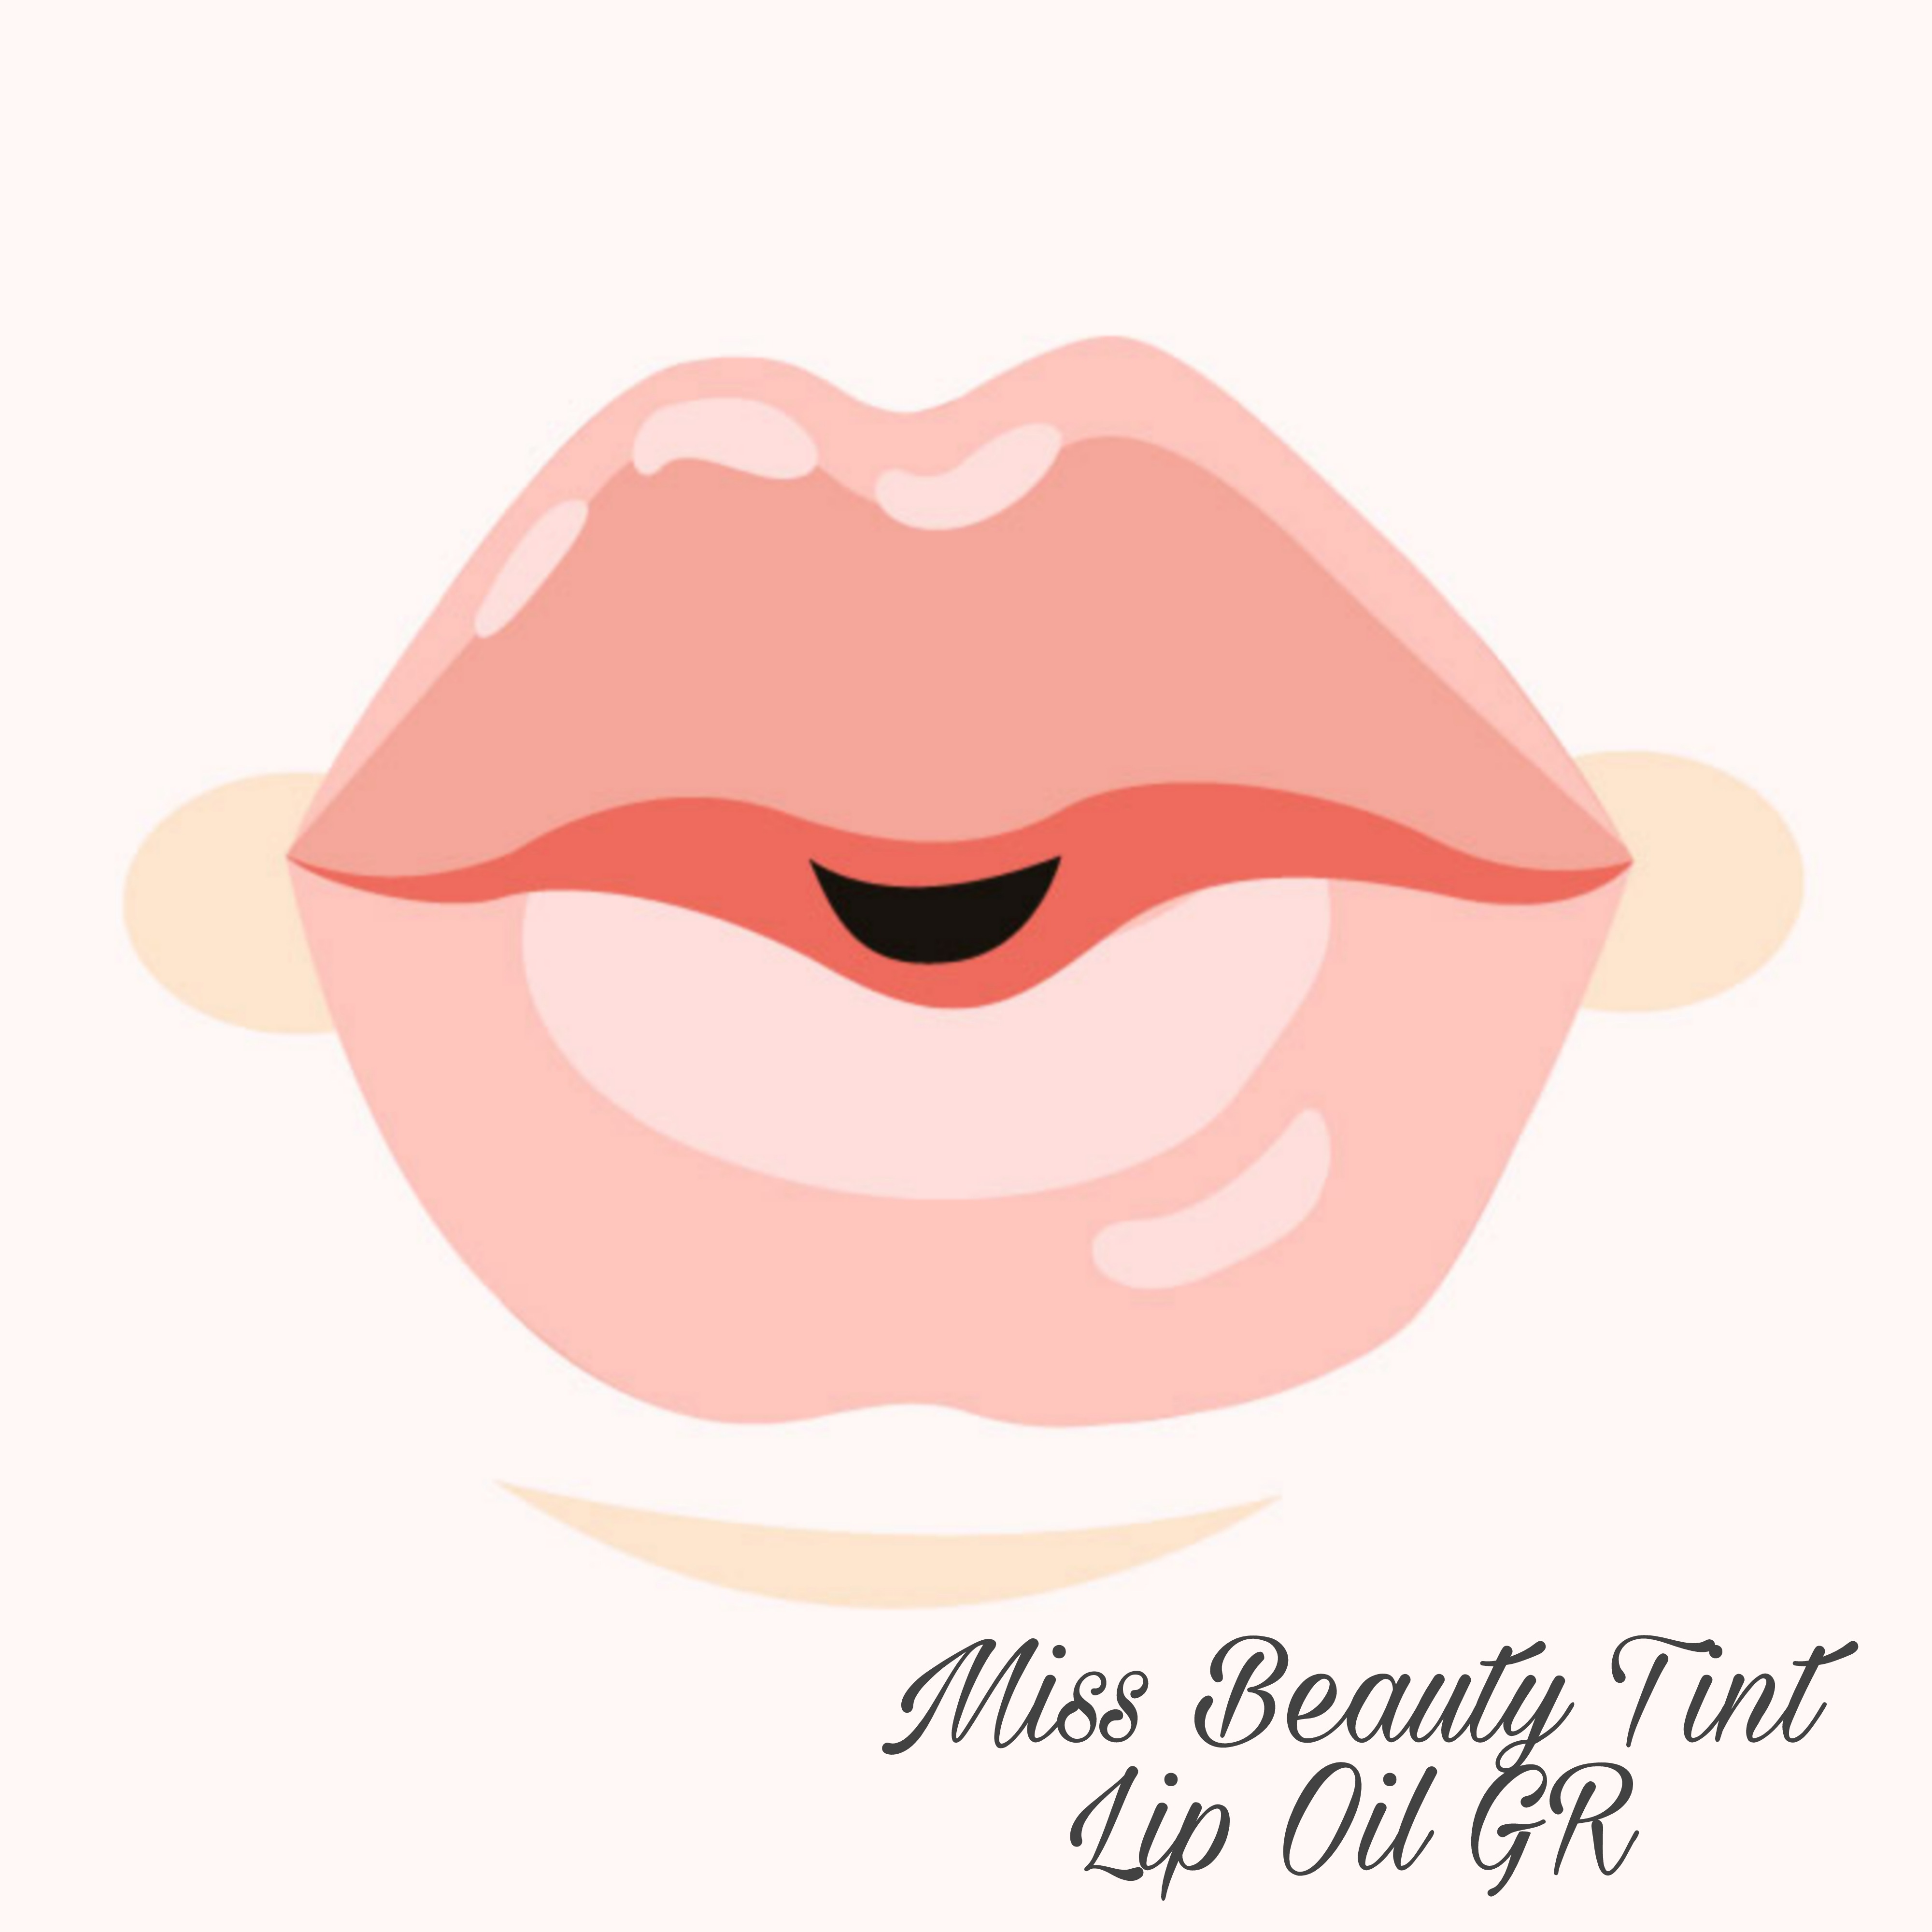 Miss Beauty Tint Lip Oil GR